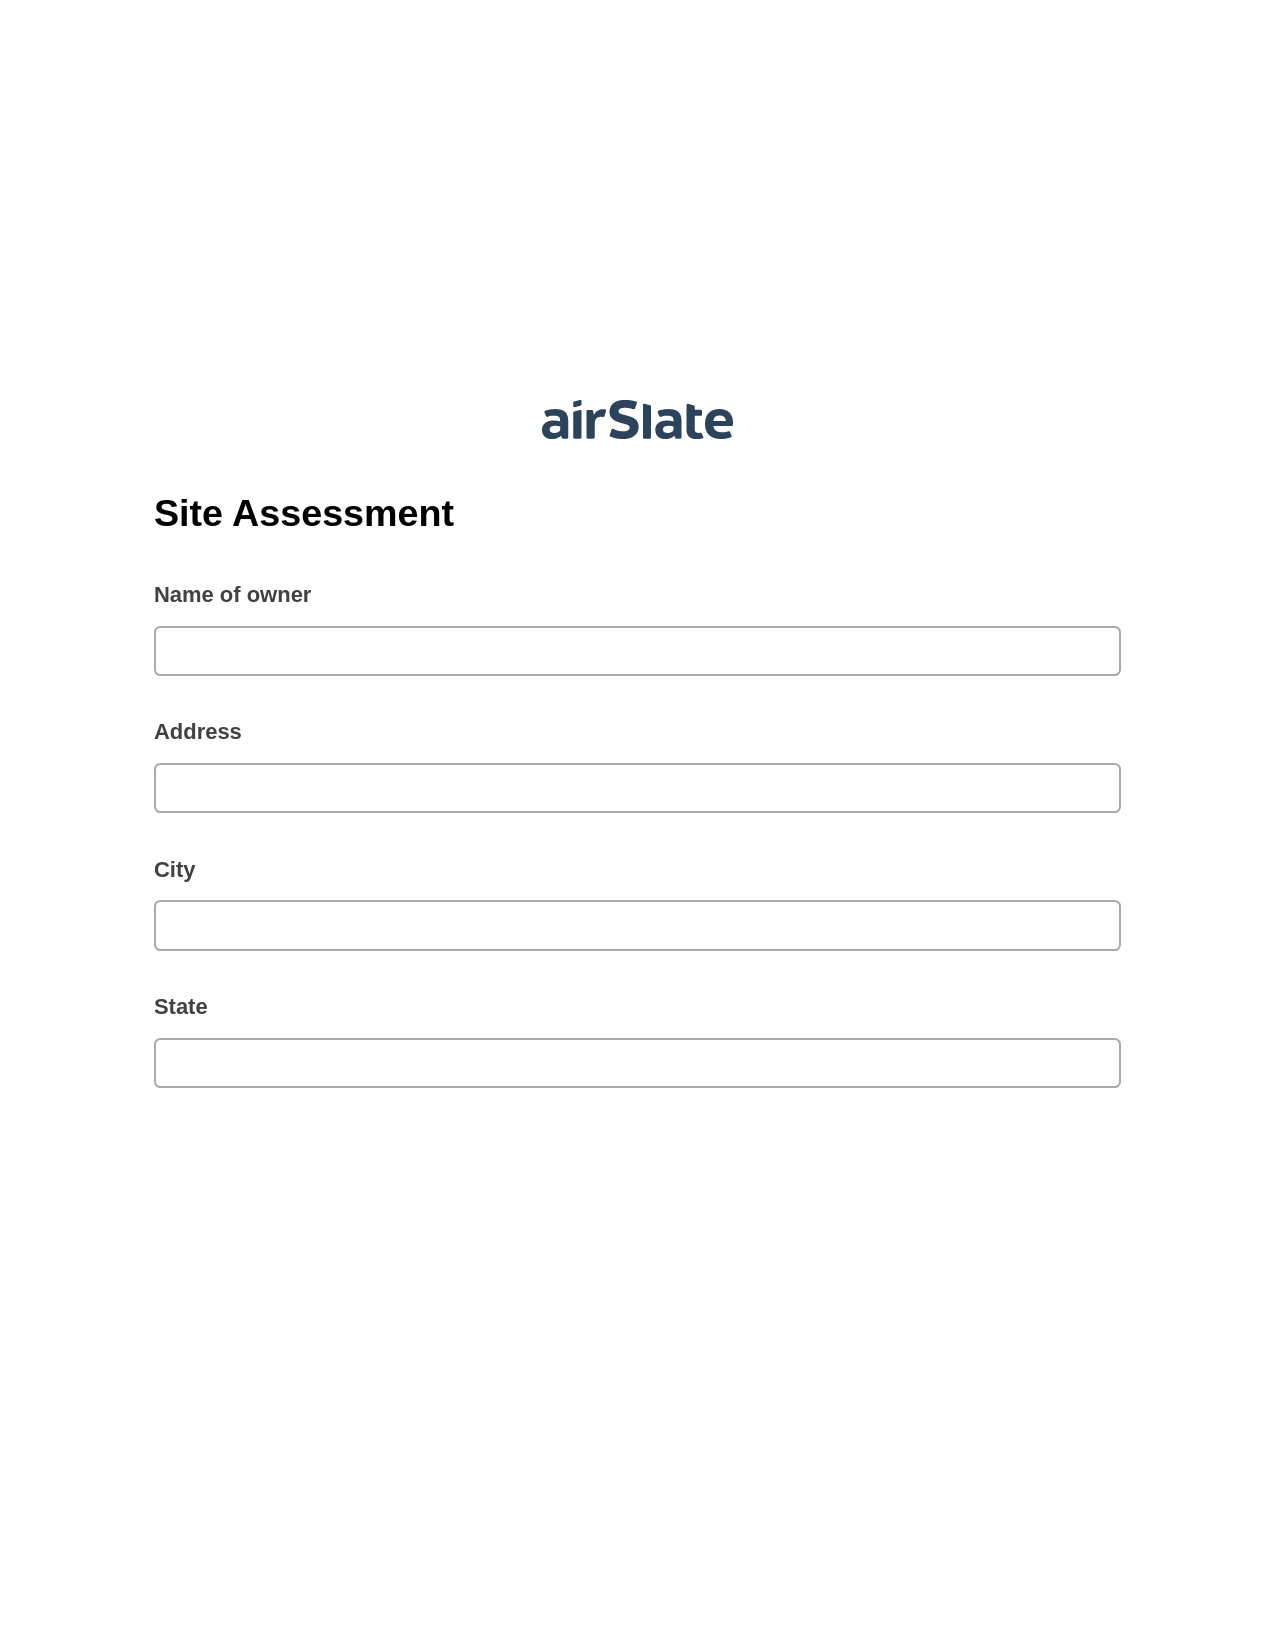 Site Assessment Pre-fill Slate from MS Dynamics 365 Records Bot, Invoke Salesforce Process Bot, Slack Notification Postfinish Bot